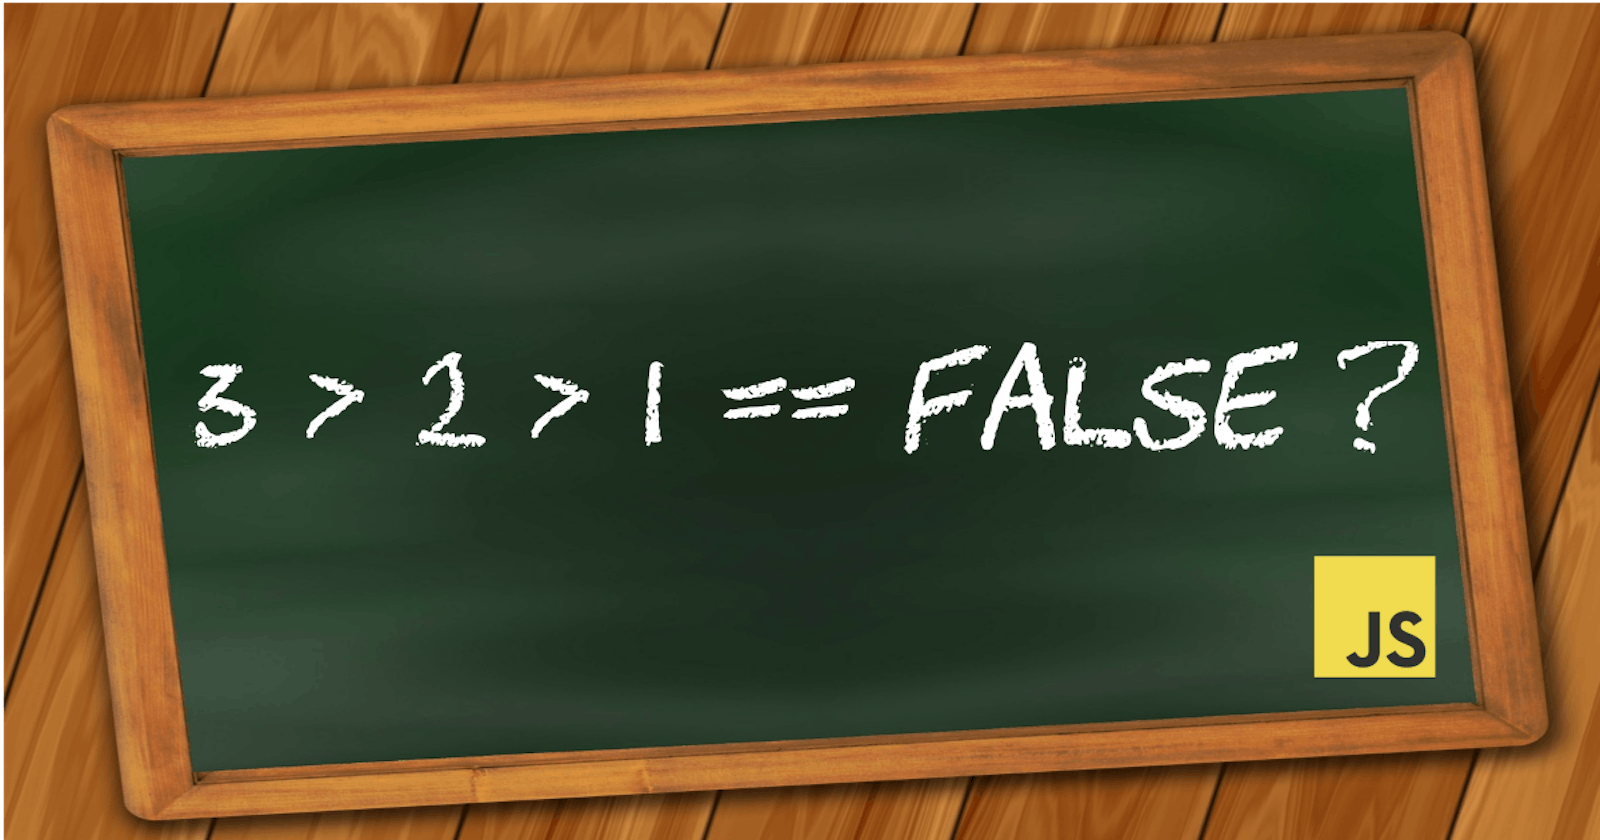 Why 3 > 2 > 1 gives false